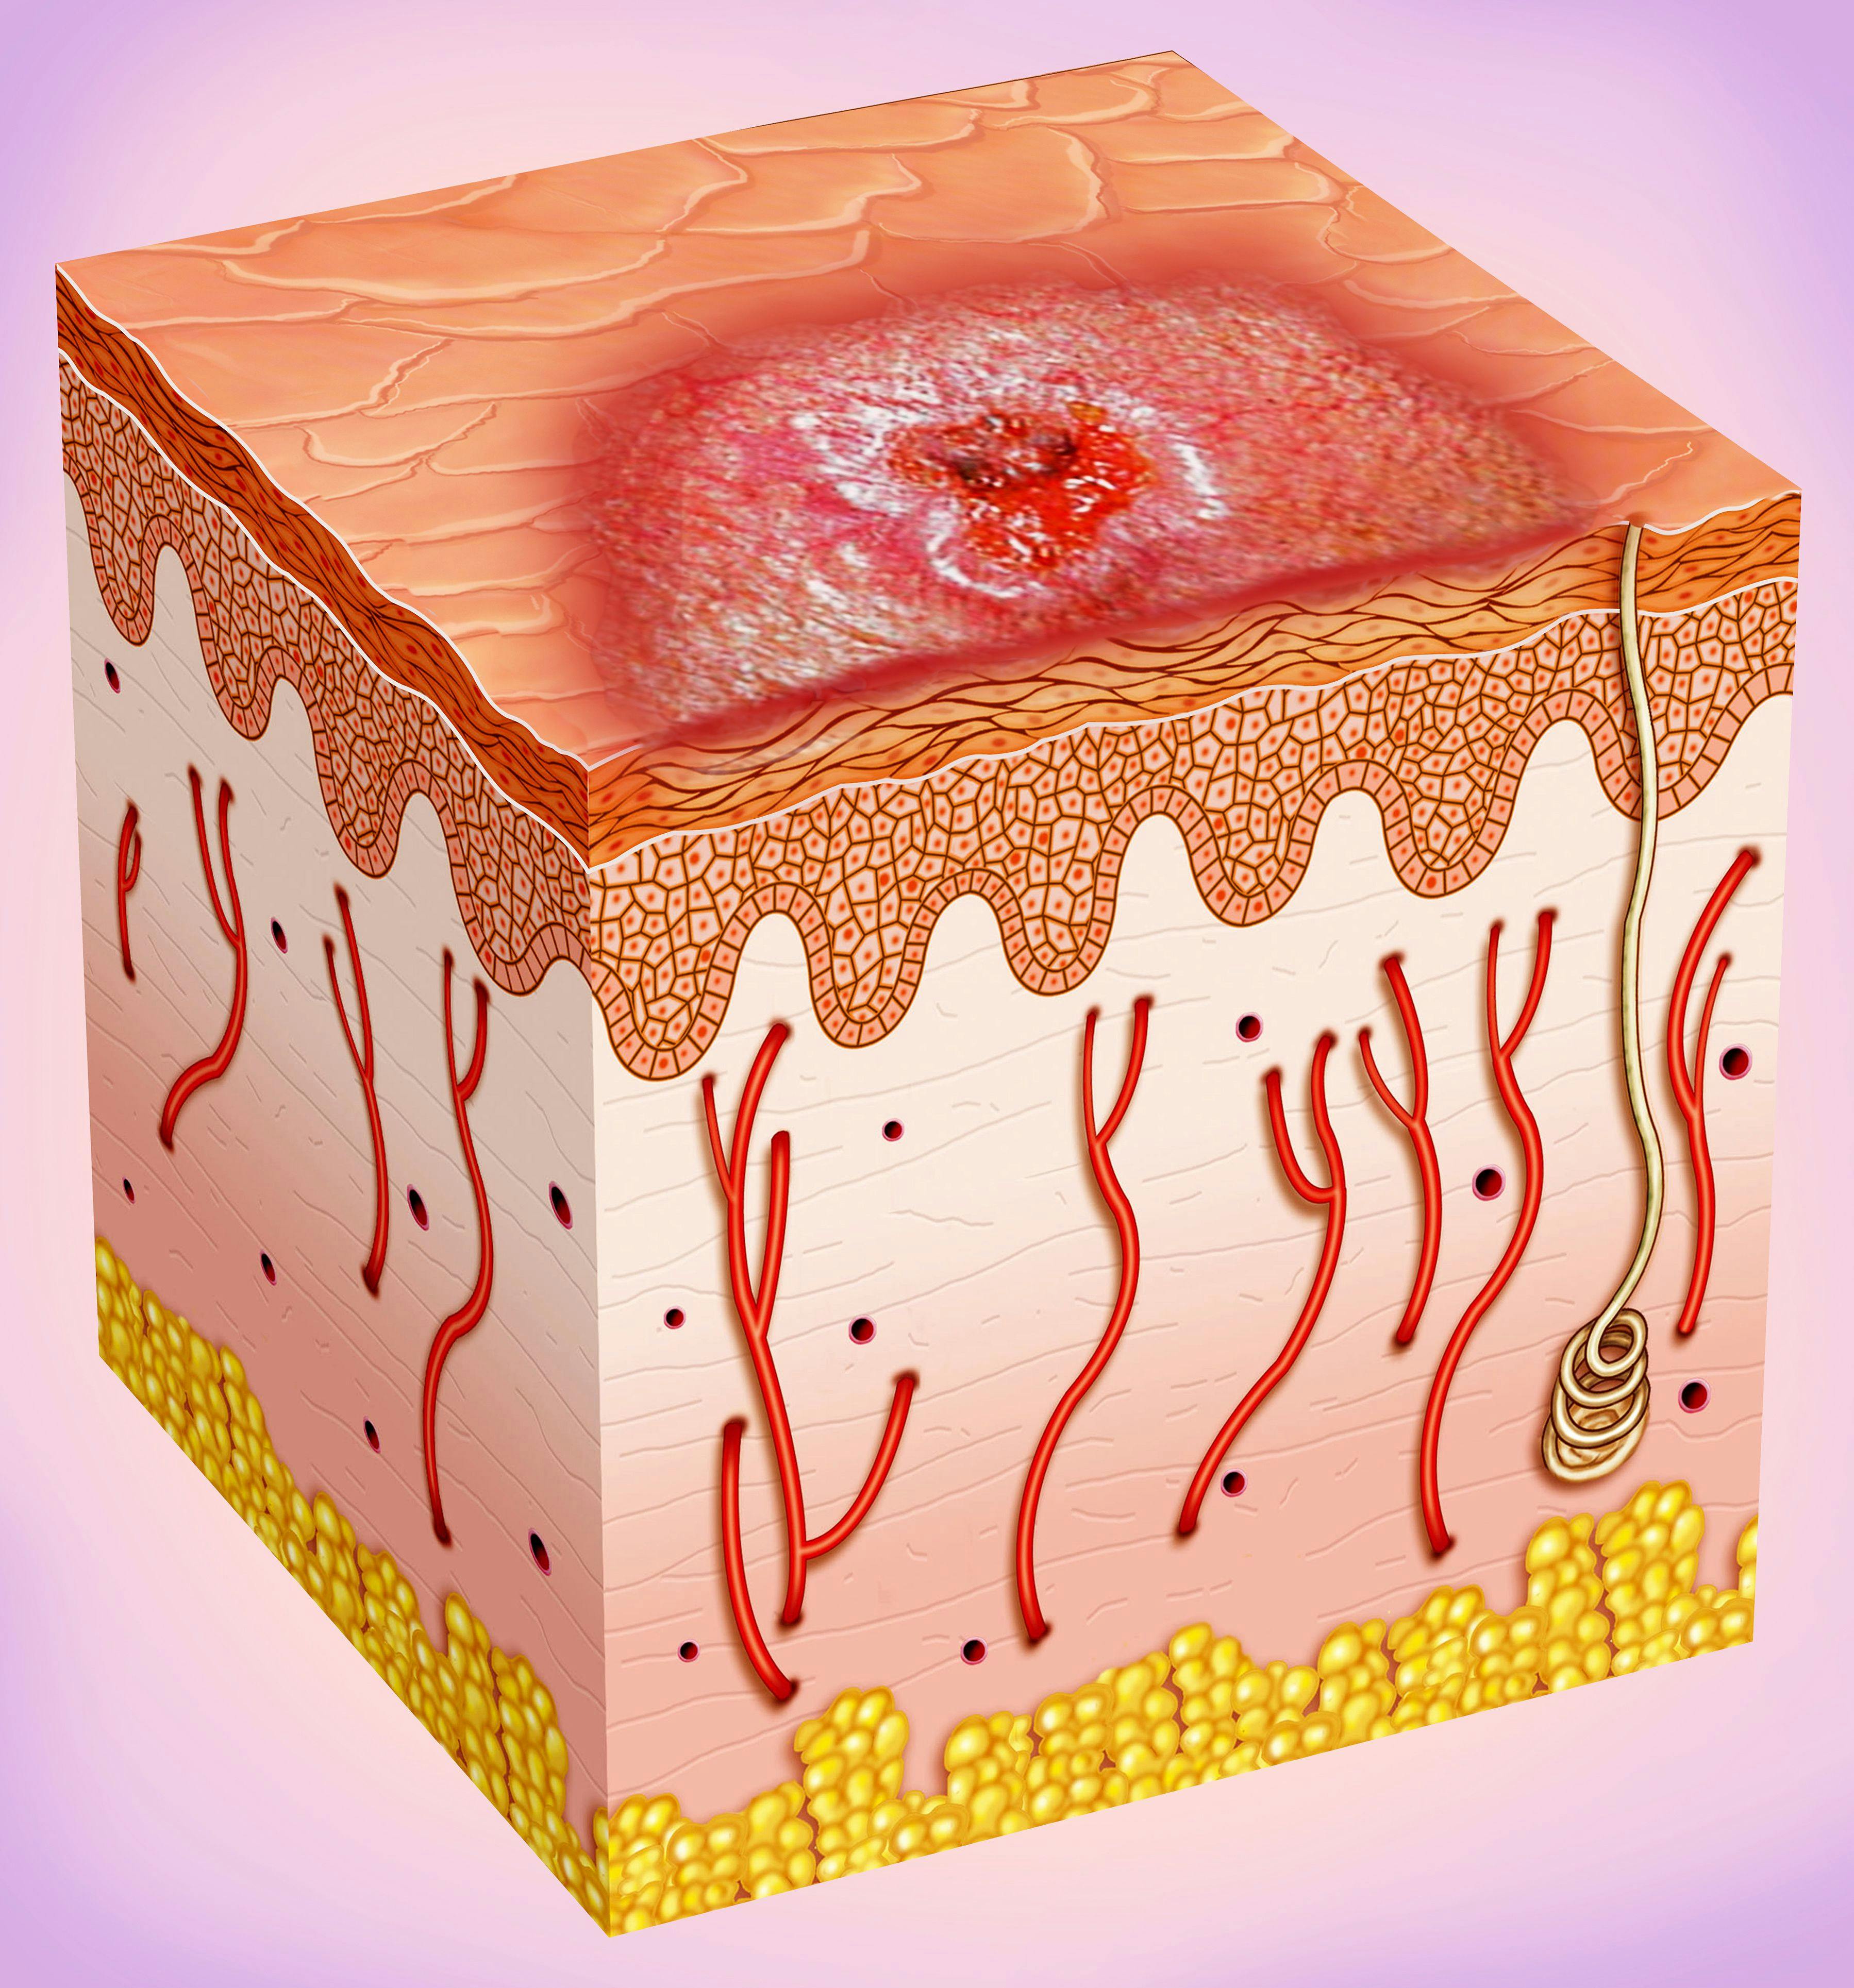 Basal cell carcinoma